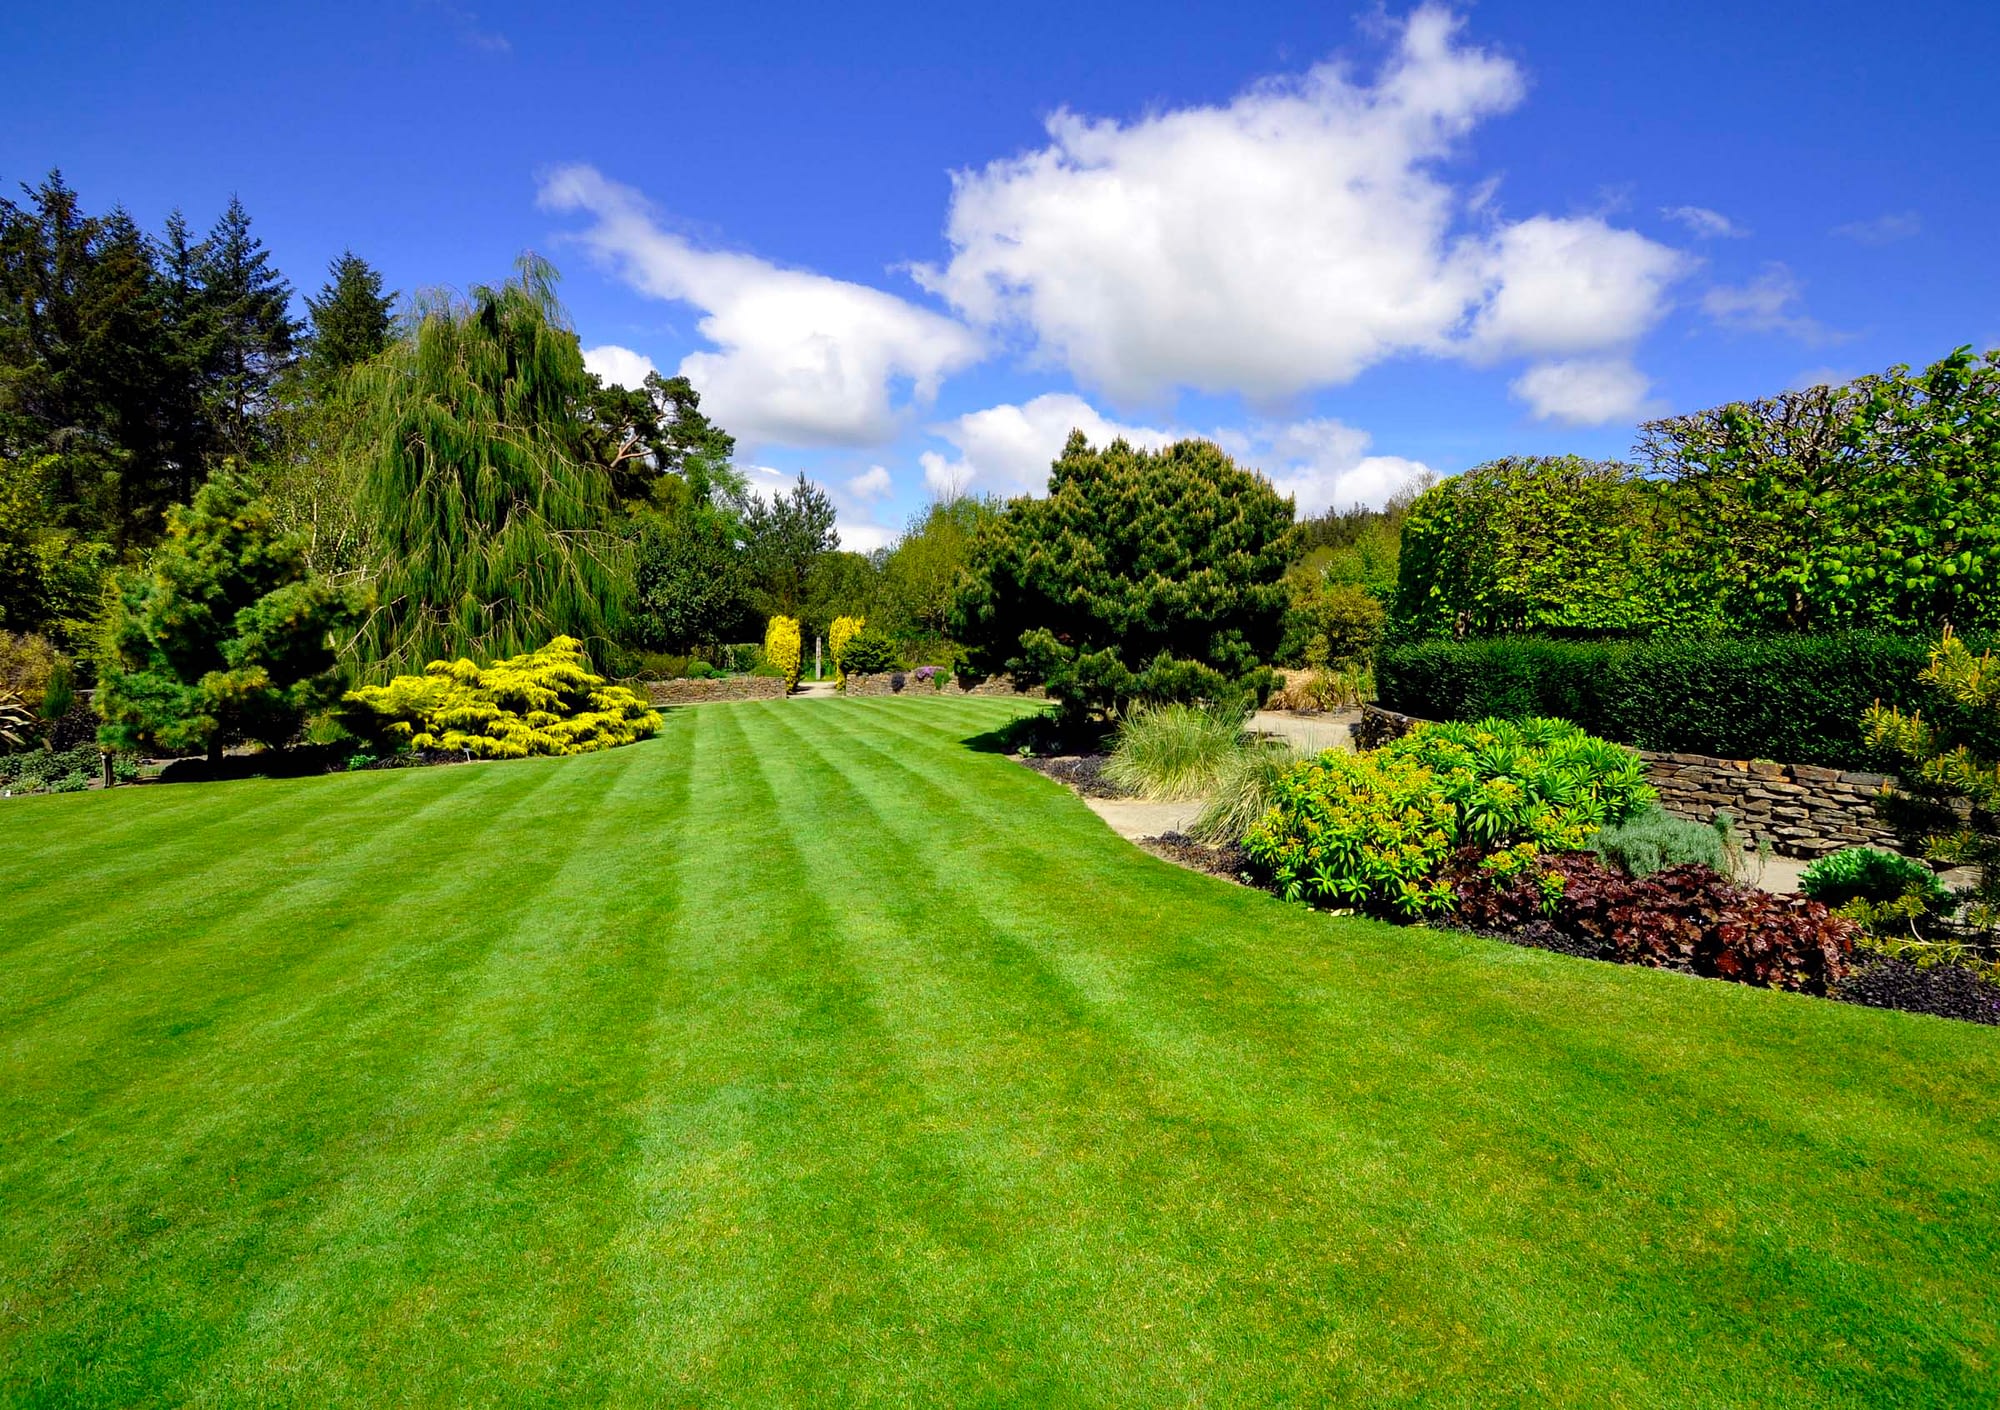 Great British Lawn pic 10